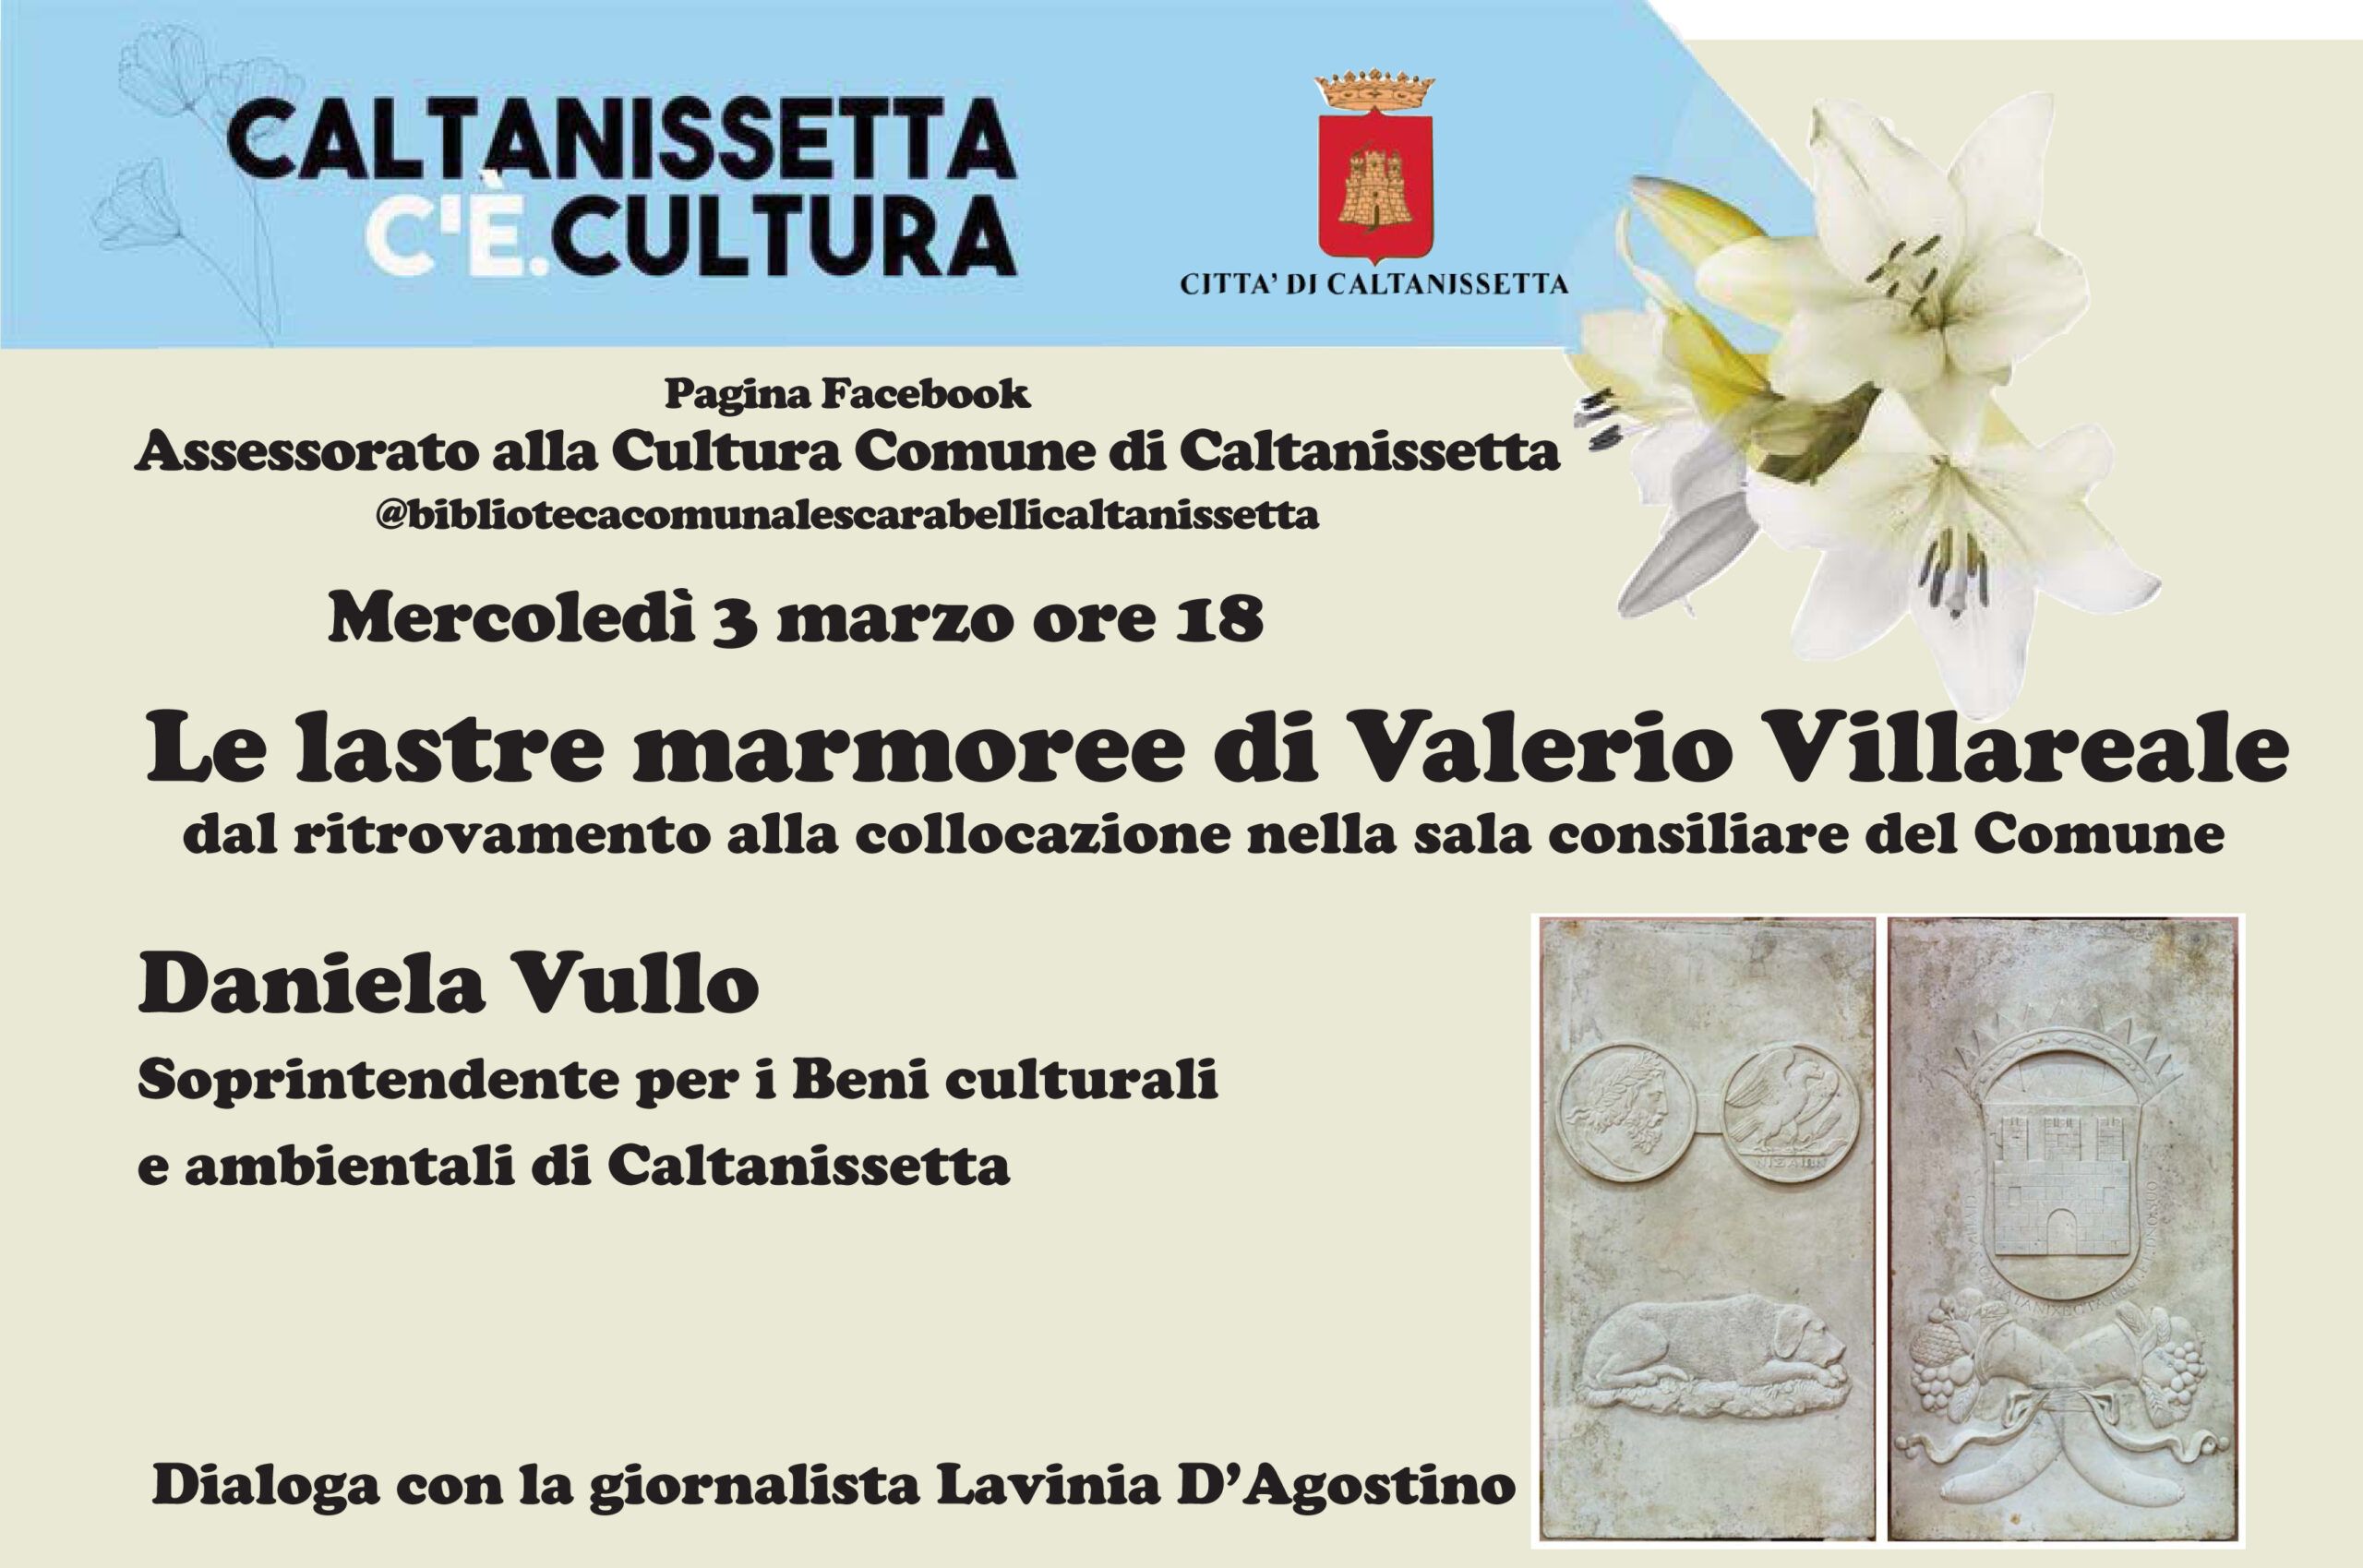 Le lastre marmoree di Valerio Villareale di Caltanissetta